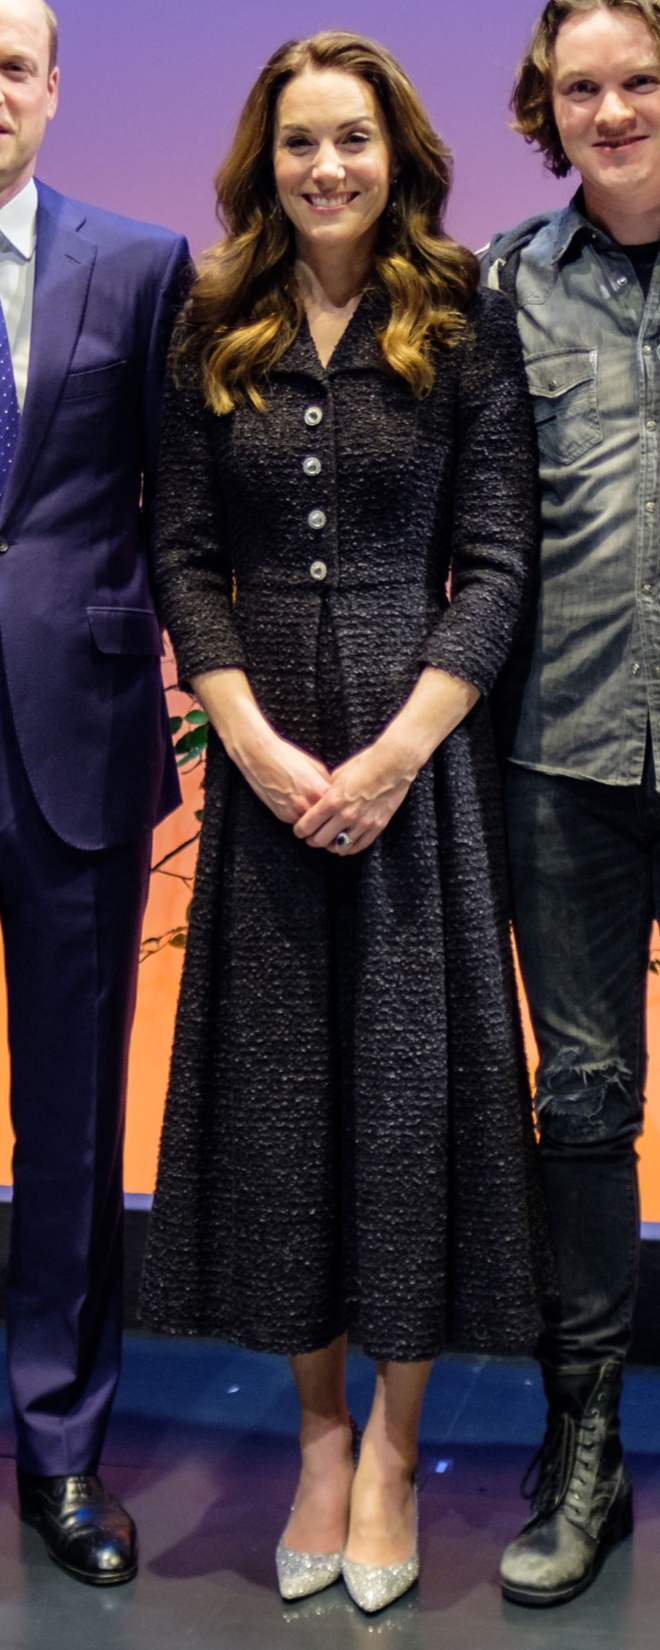 Eponine Black Bouclé Evening Dress as seen on Kate Middleton, The Duchess of Cambridge.